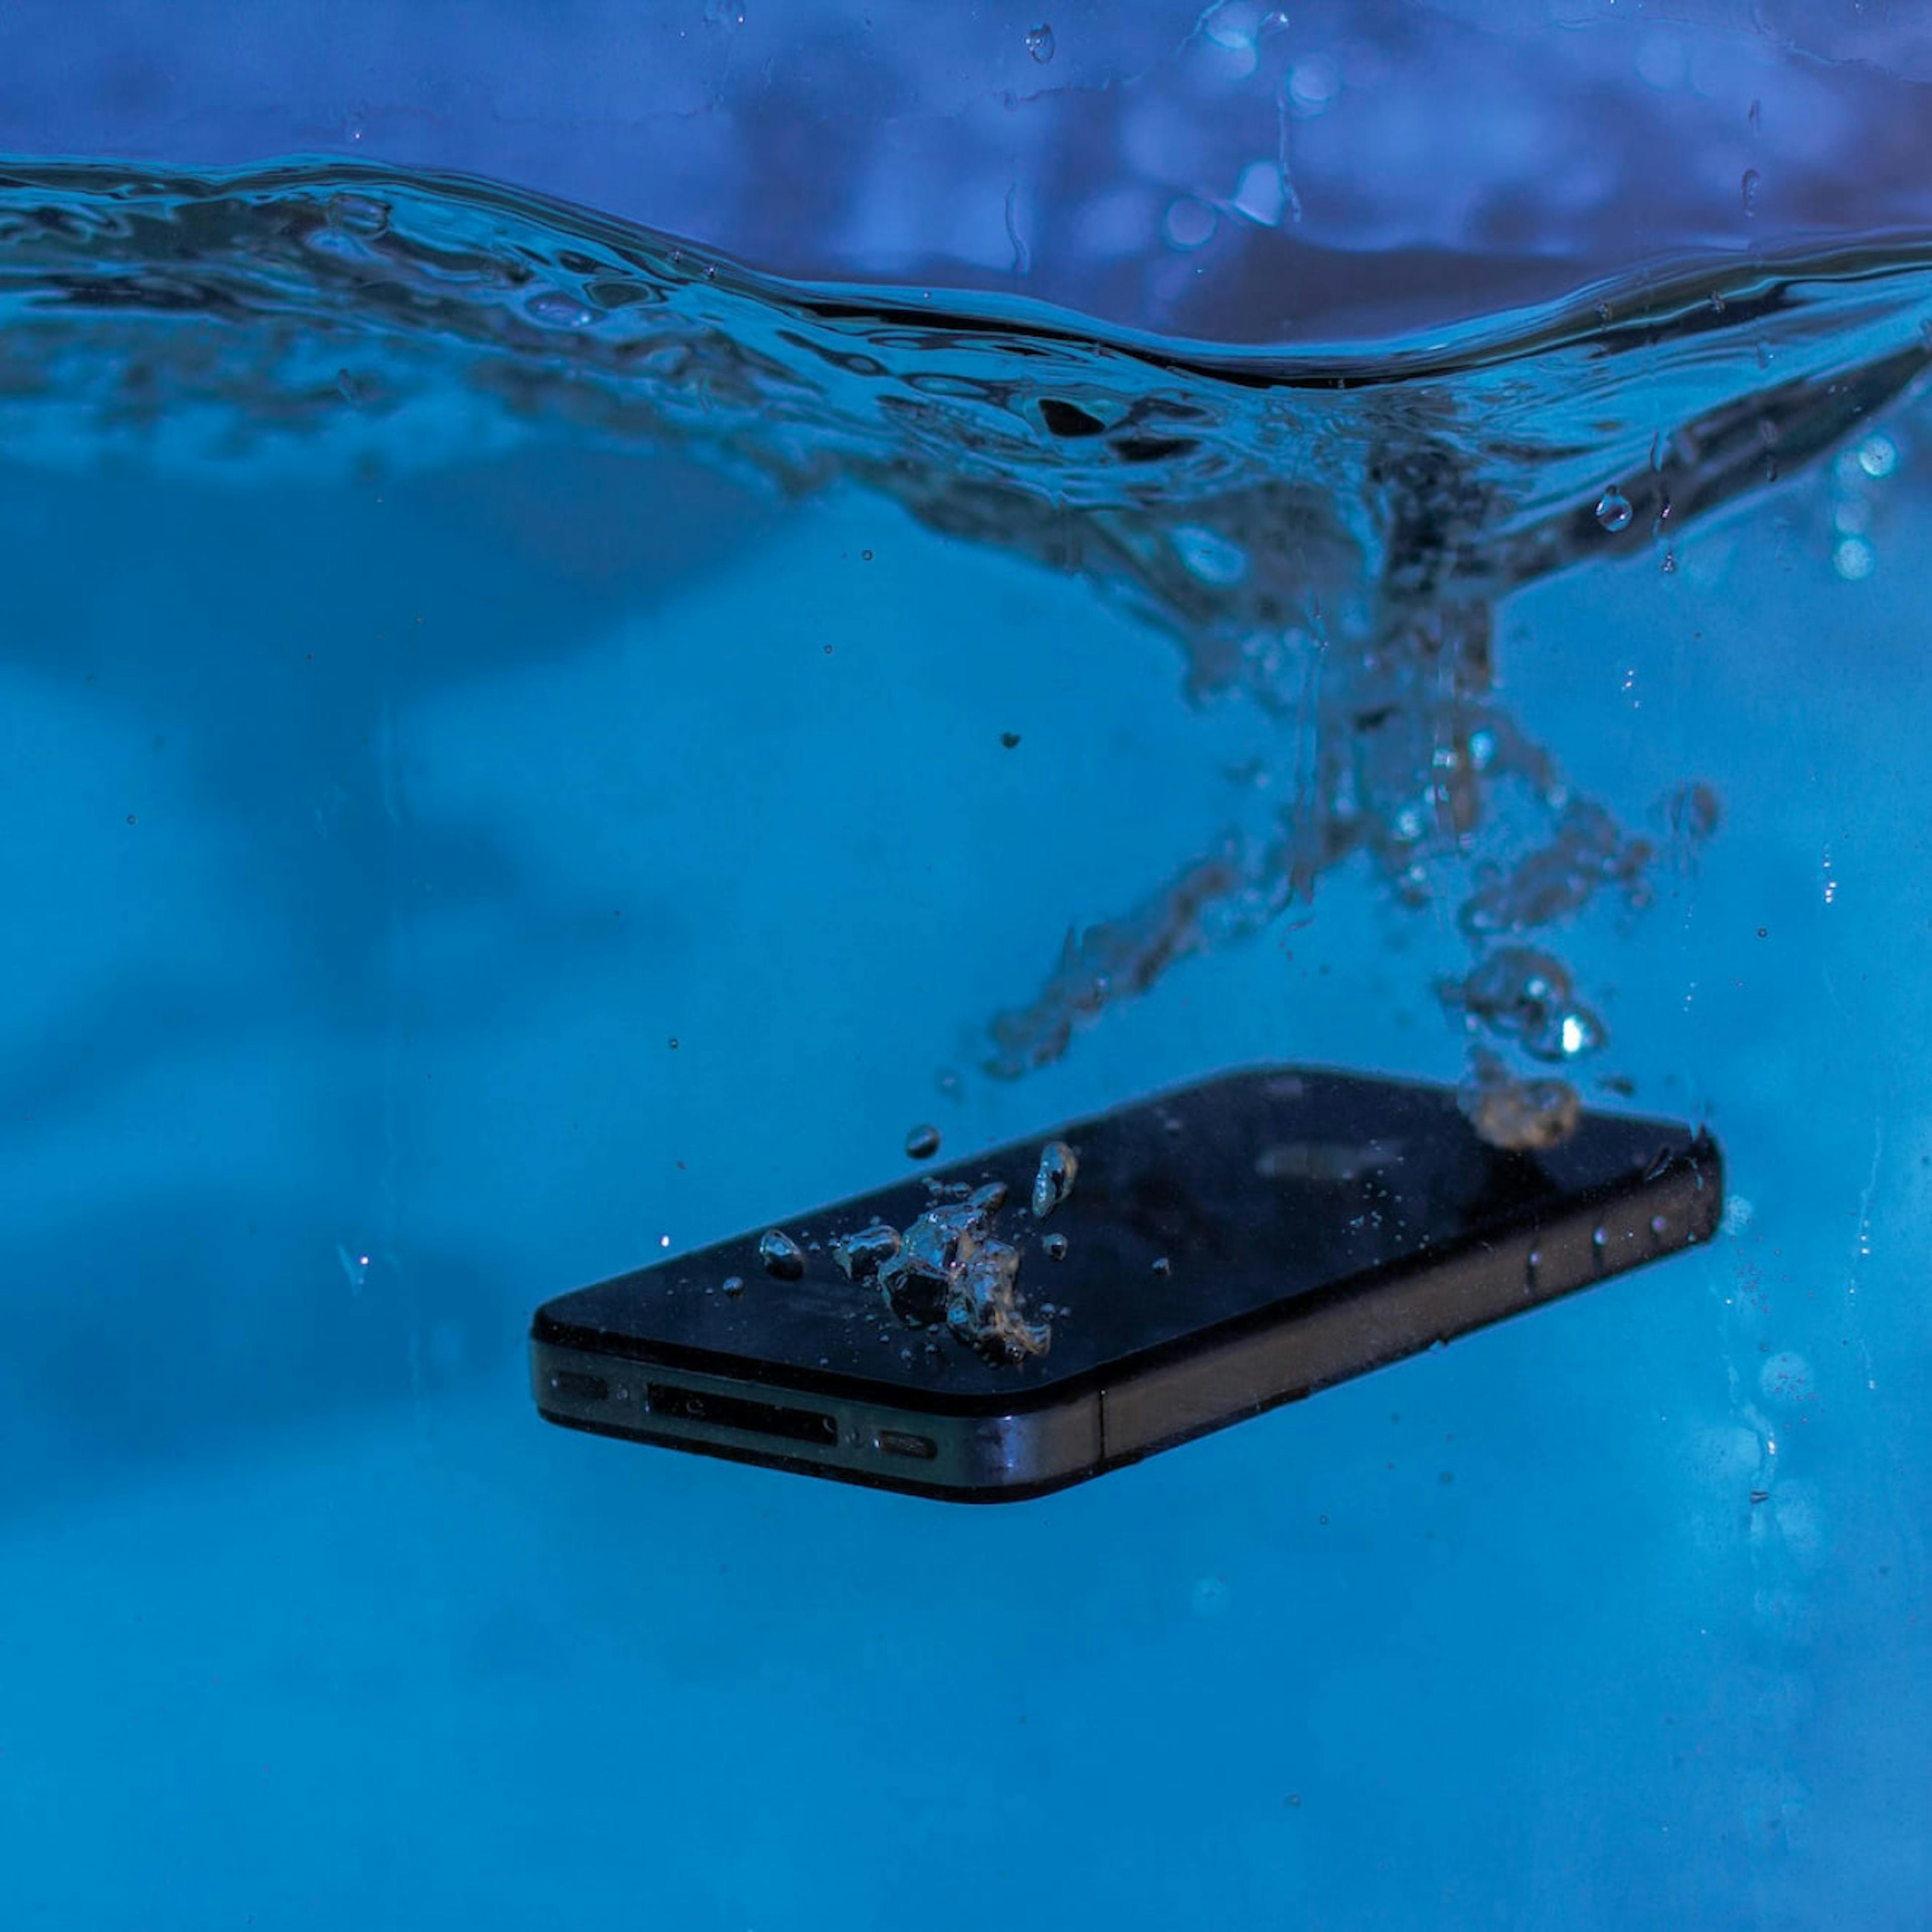 A phone submerged in an Italian hotel pool.